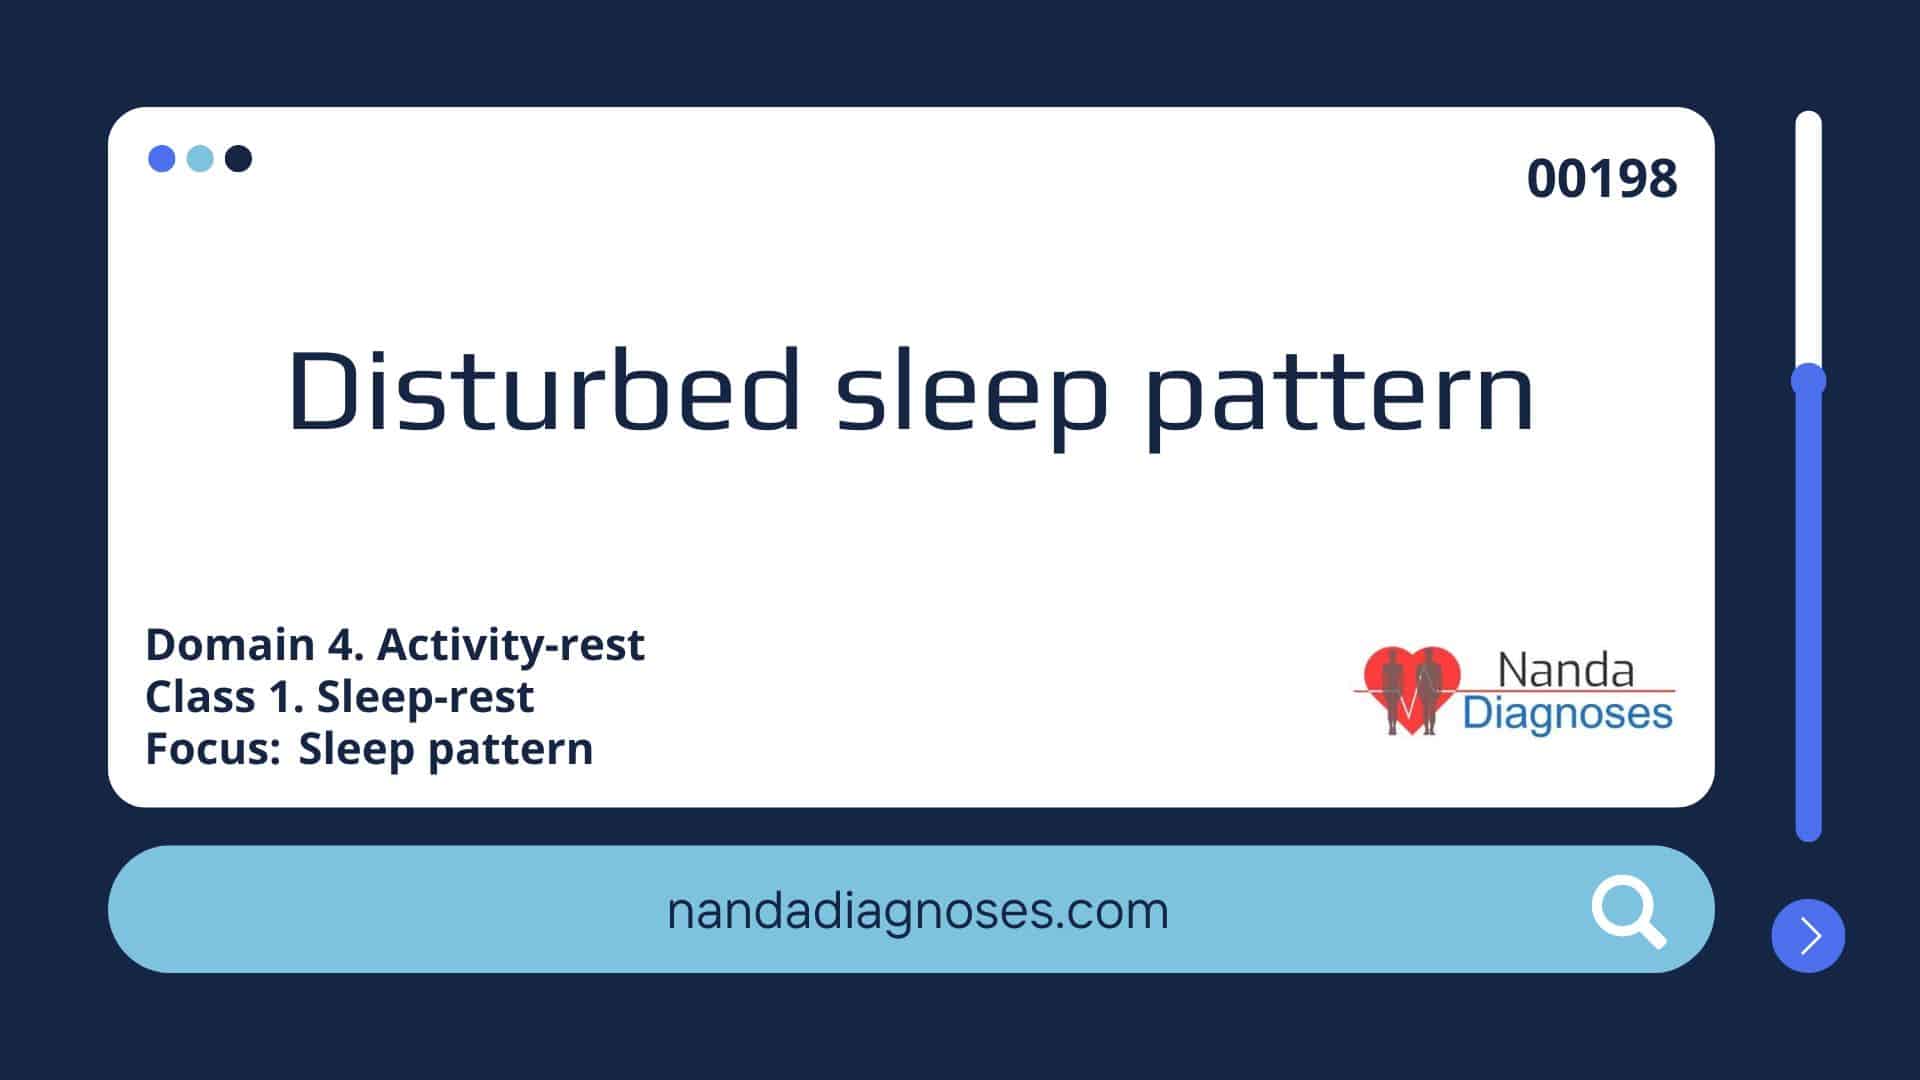 Nursing diagnosis Disturbed sleep pattern